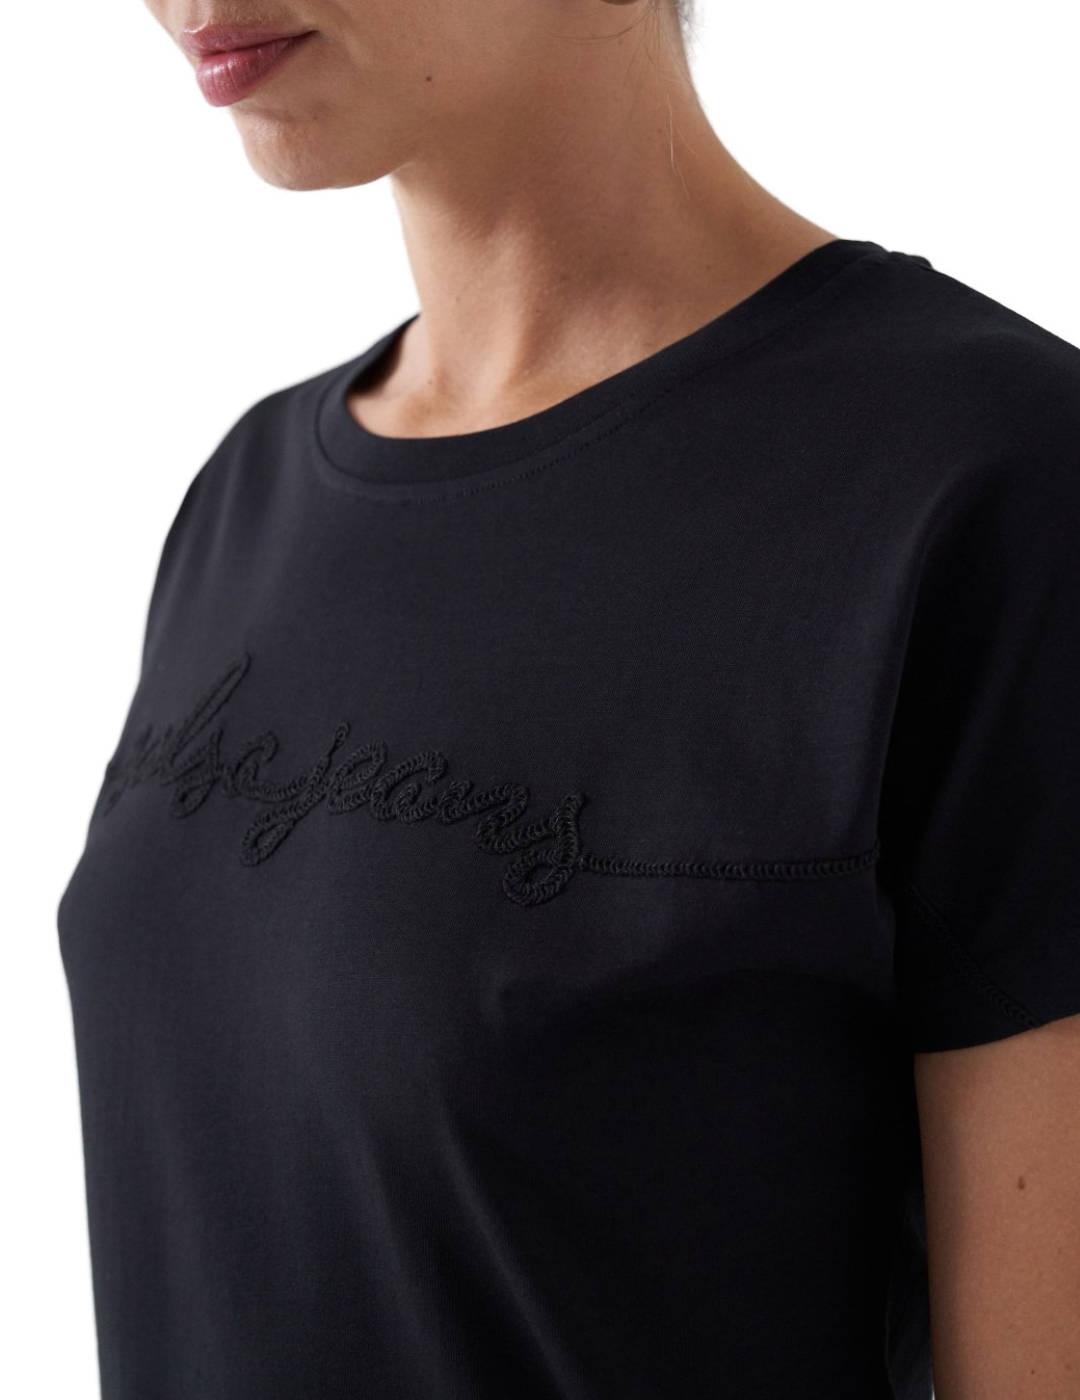 Camiseta Salsa negra logo trenzado manga corta de mujer